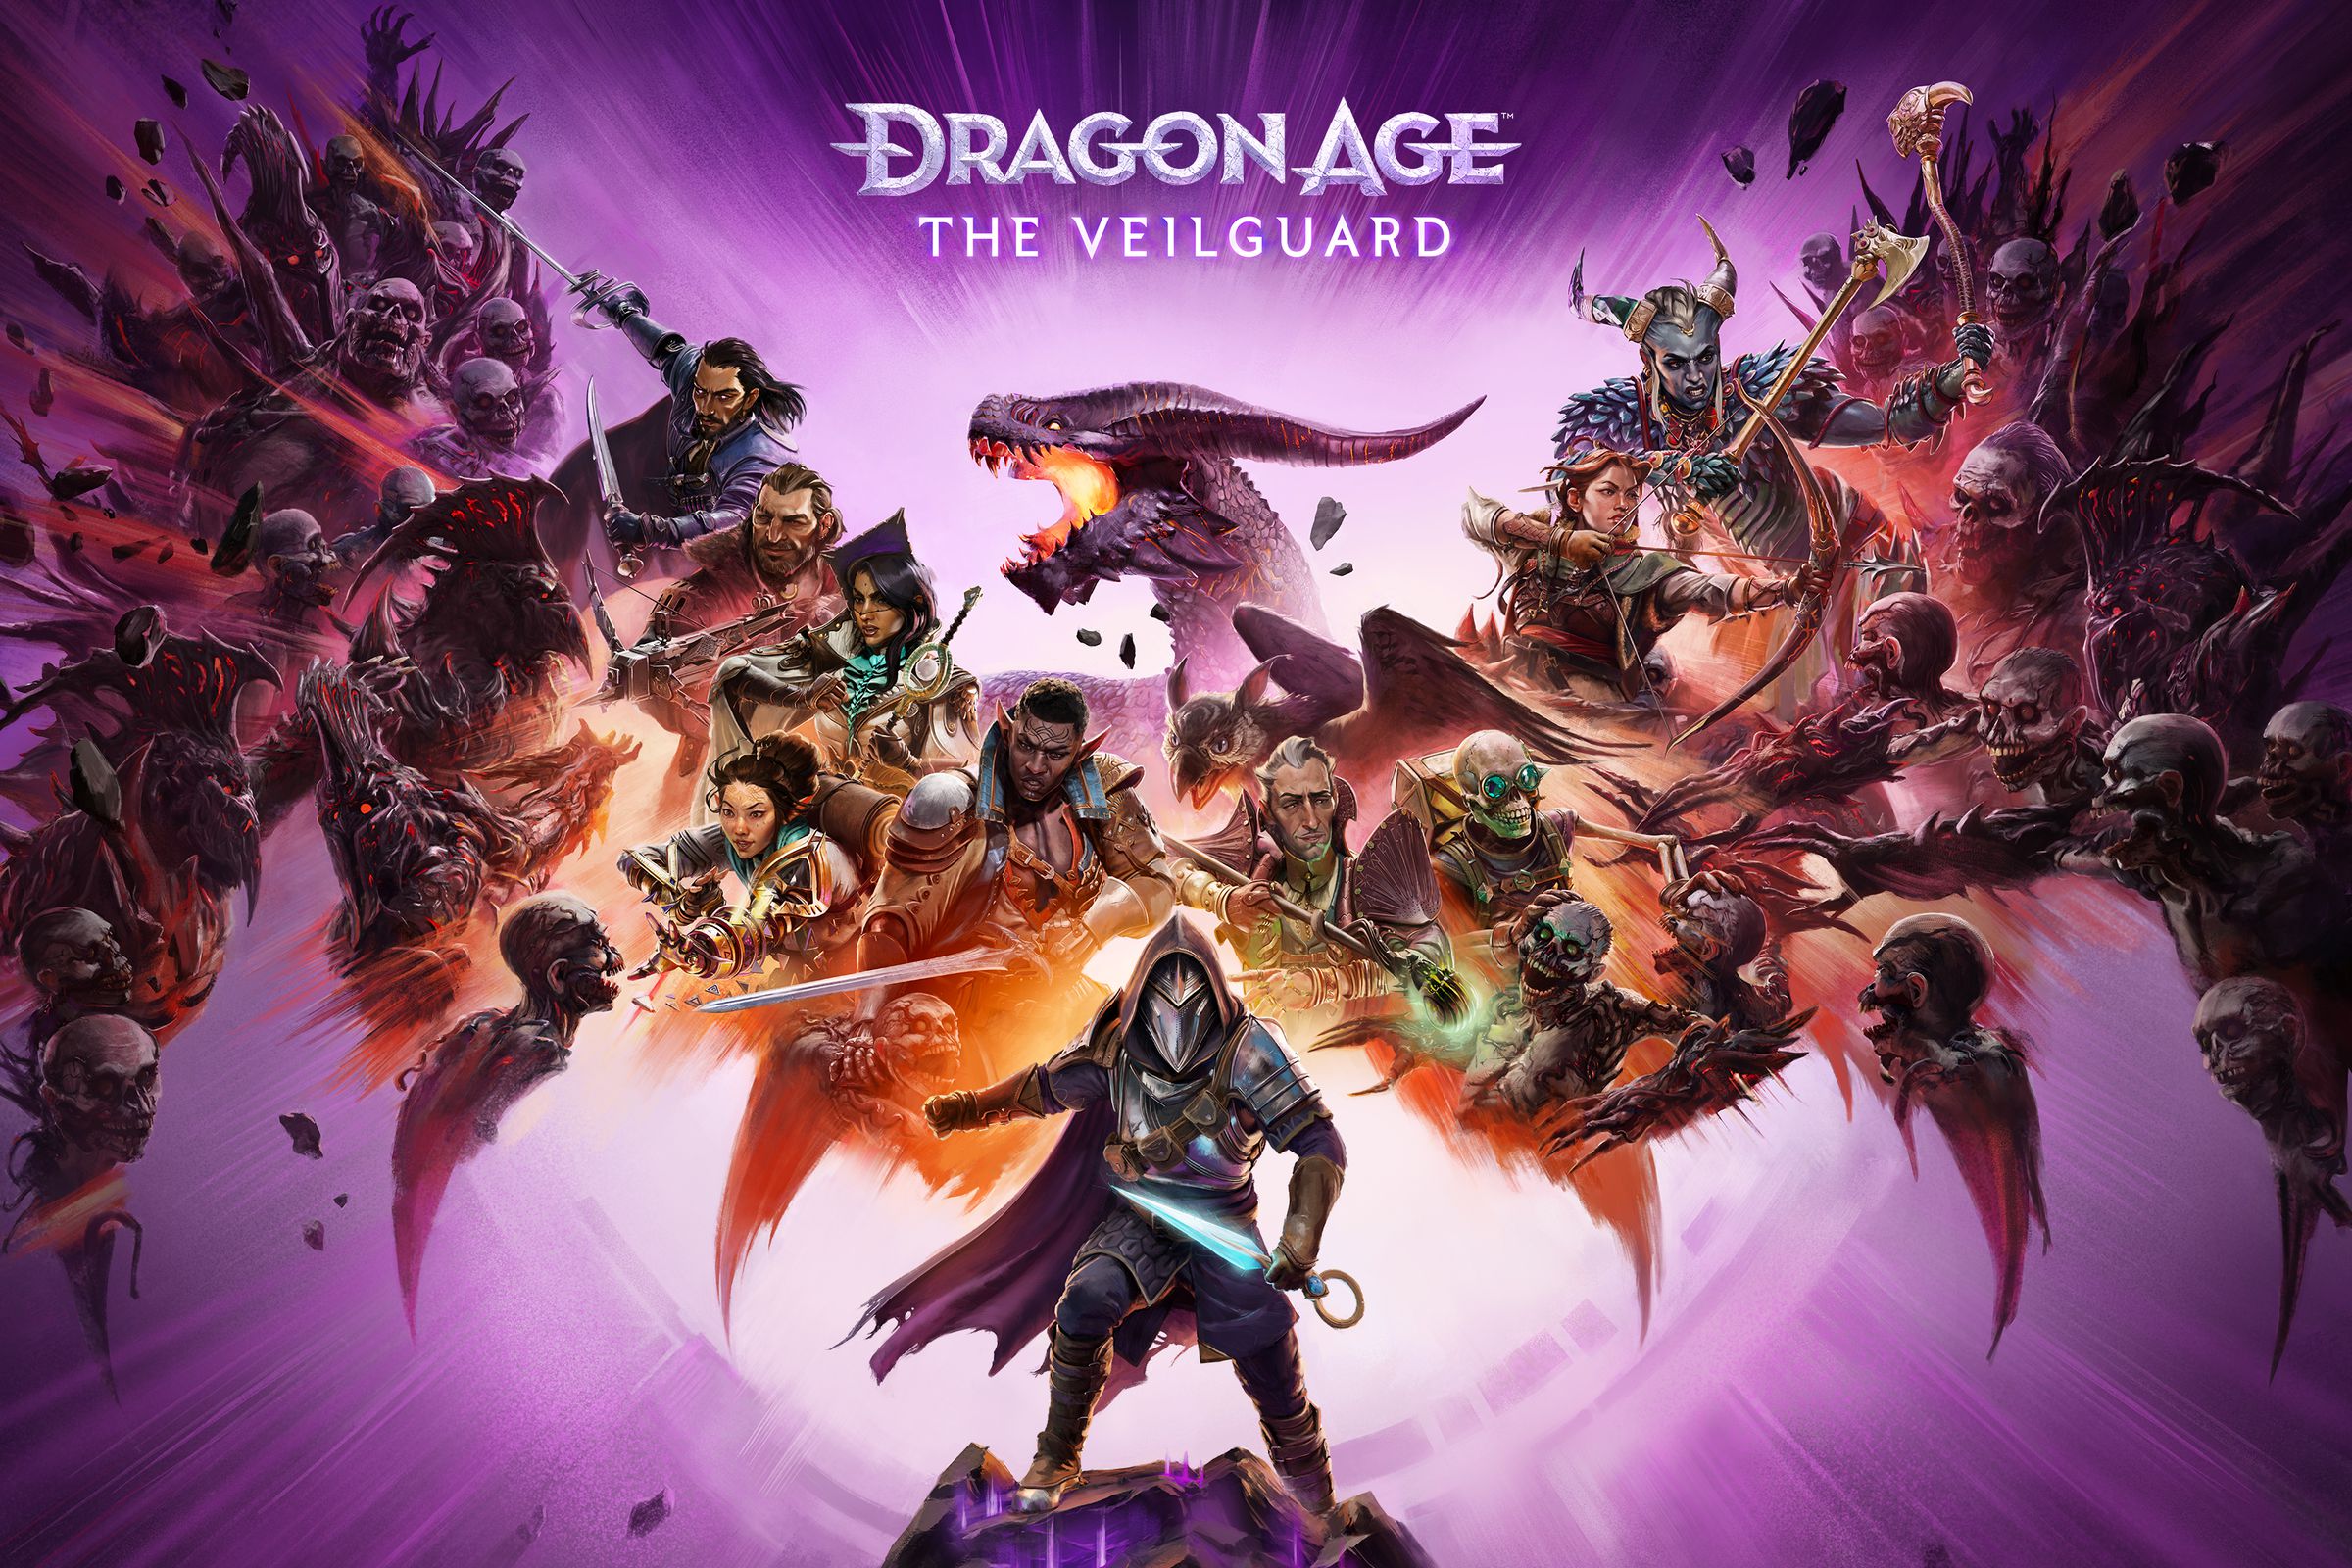 Key art from Dragon Age: The Veilguard